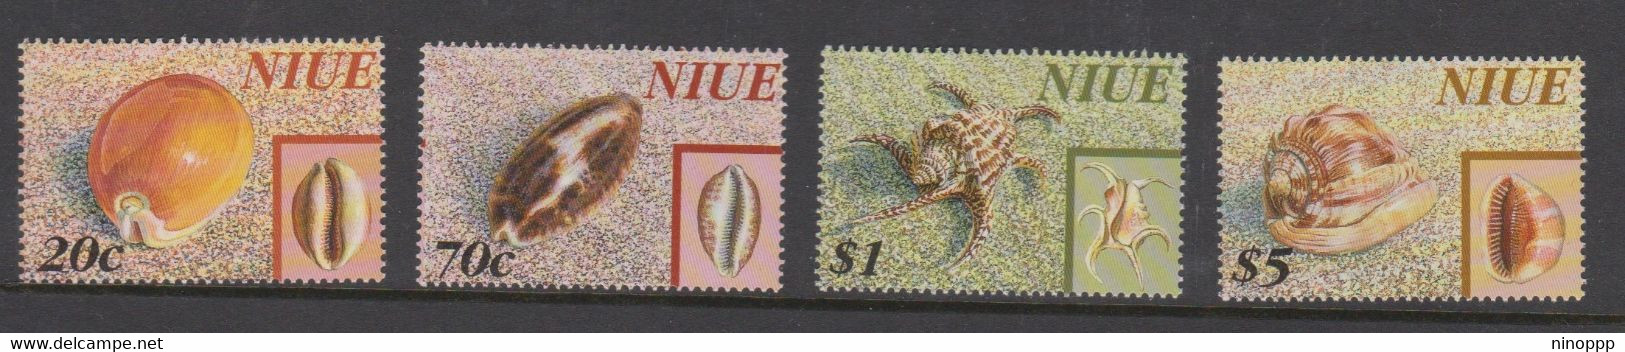 Niue  913 1998 Shells  Mint Never Hinged - Niue